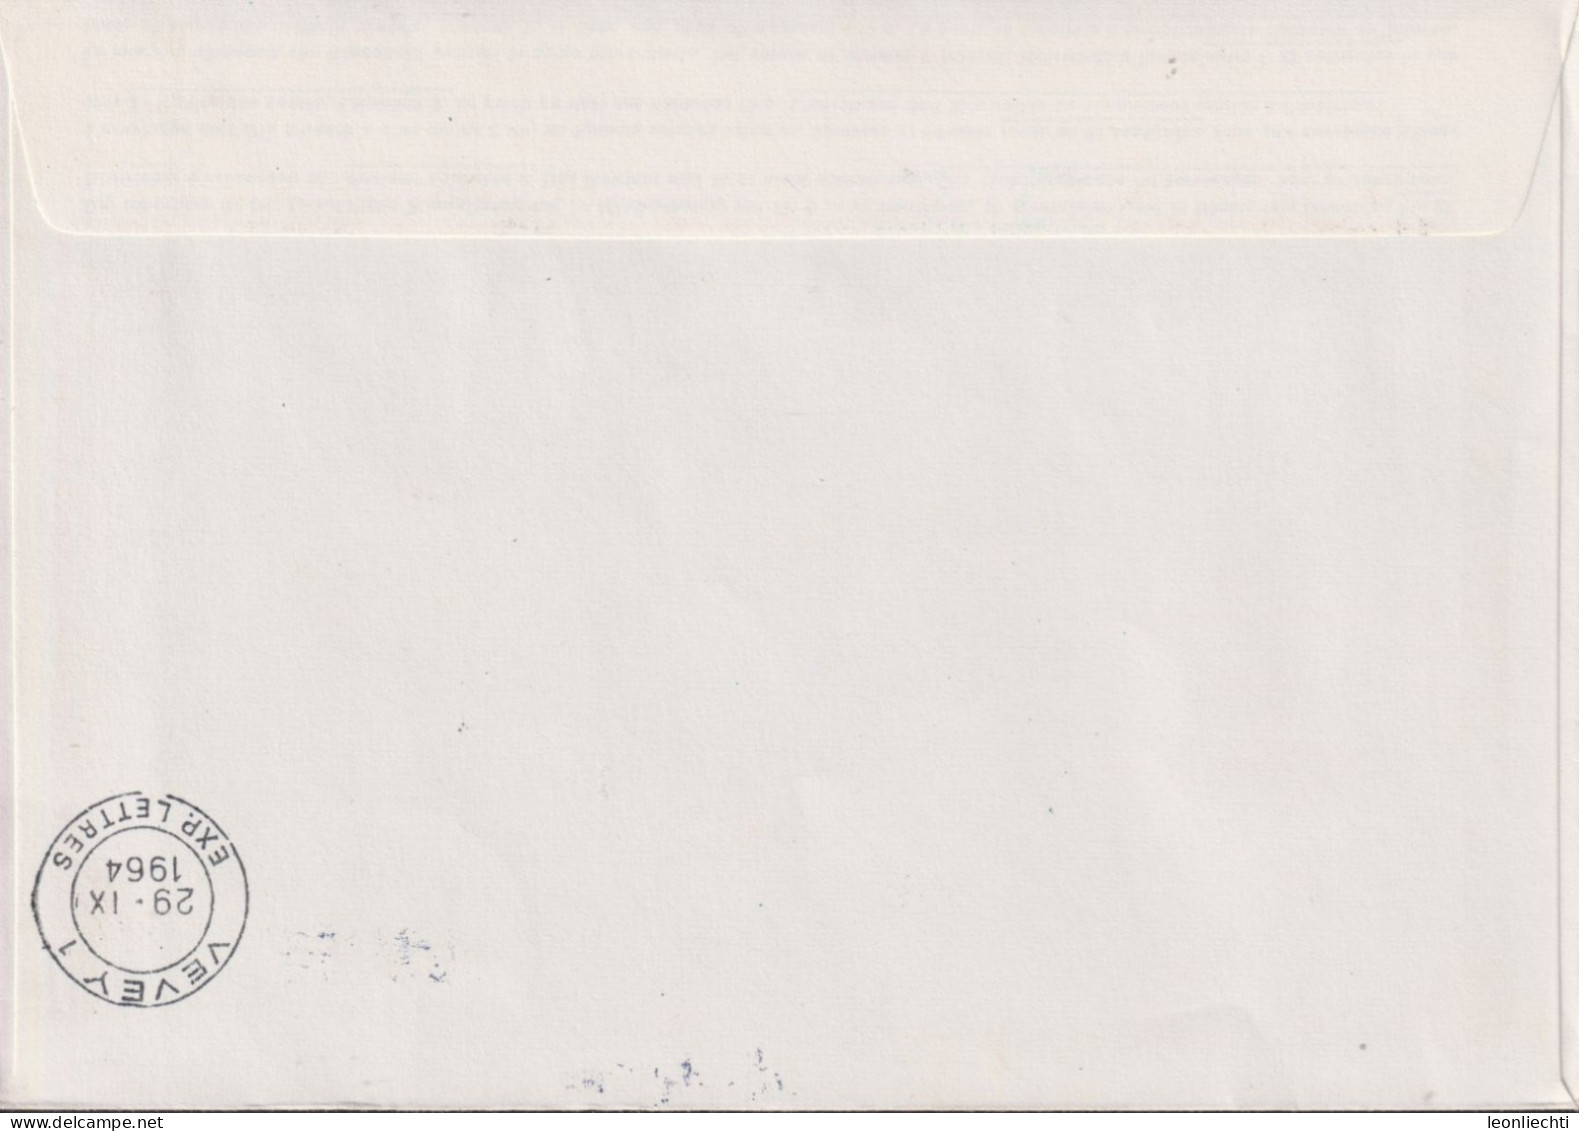 1964 Schweiz Brief ° Vol Postal Par Ballon Libre, Mehrfachfrankatur (Pro Juventute) - Montgolfier